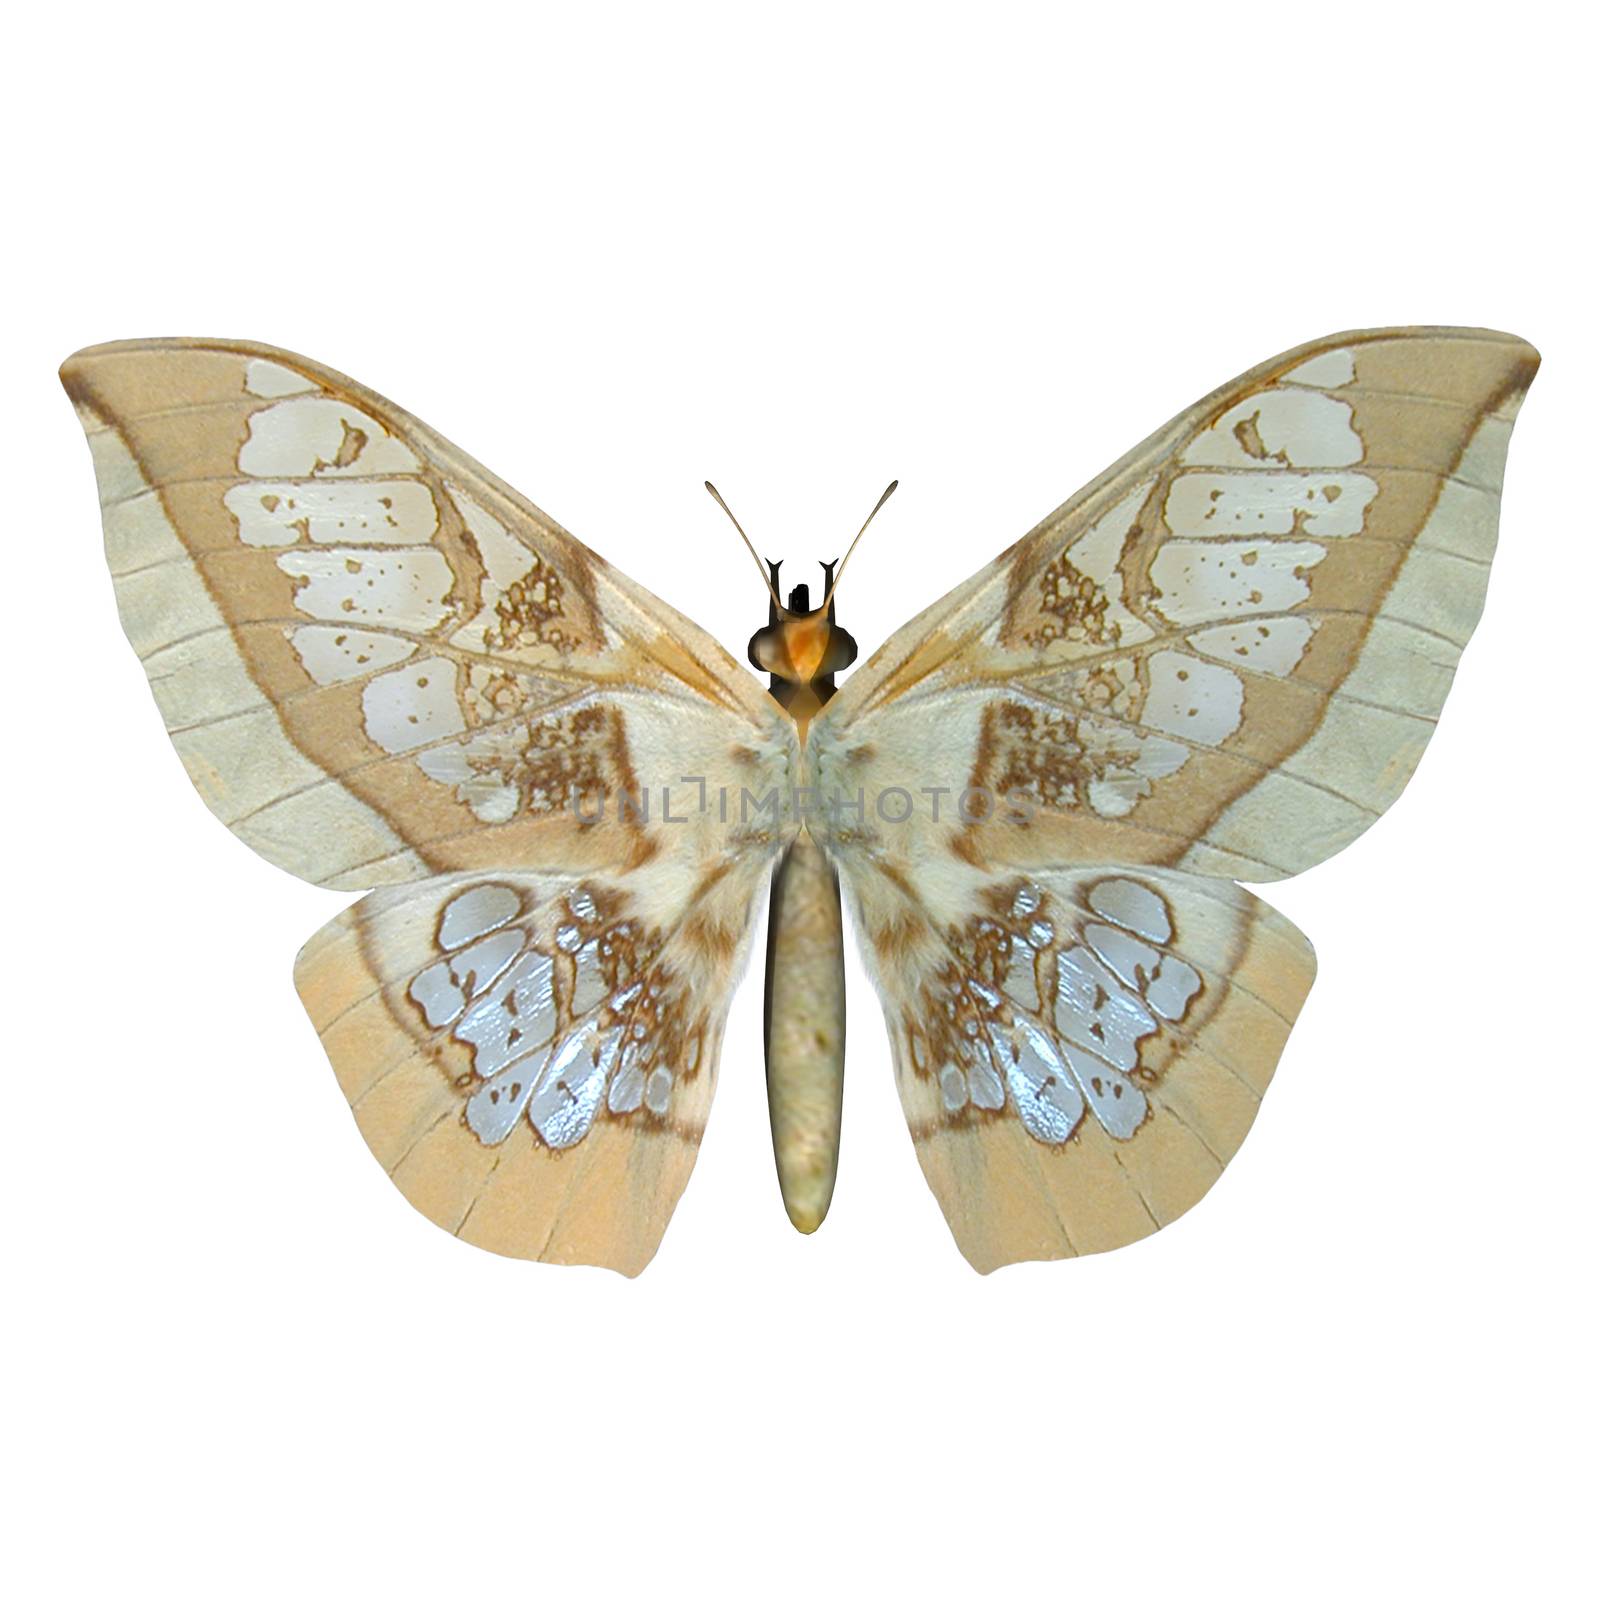 Glasswing Butterfly by Vac